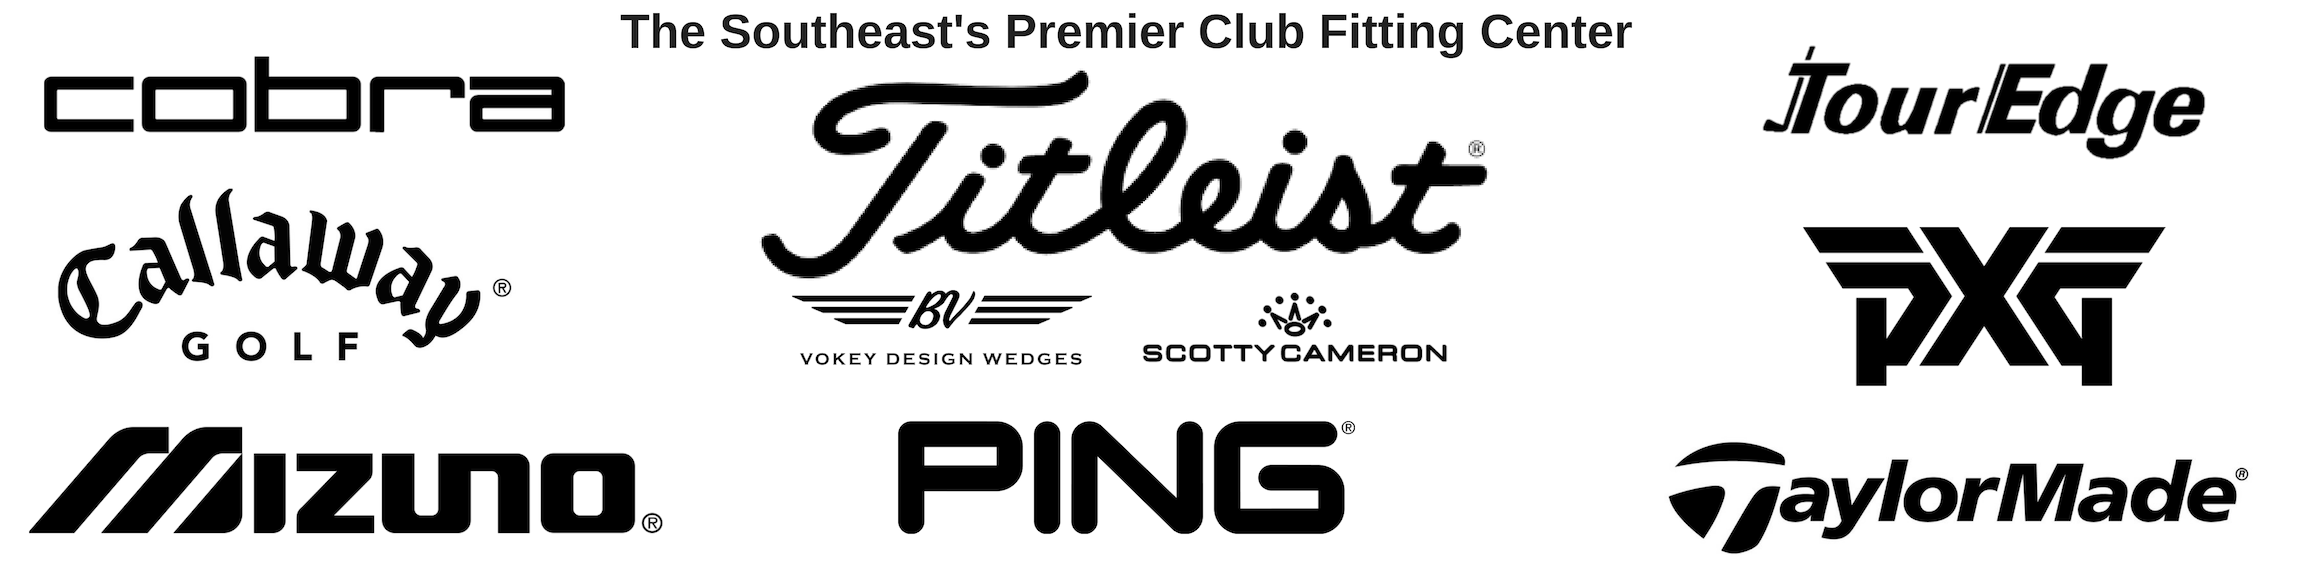 Dresser Golf PXG Titleist Callaway Taylormade Ping Custom Fit Golf Clubs Cobra Puma Golf Mizuno